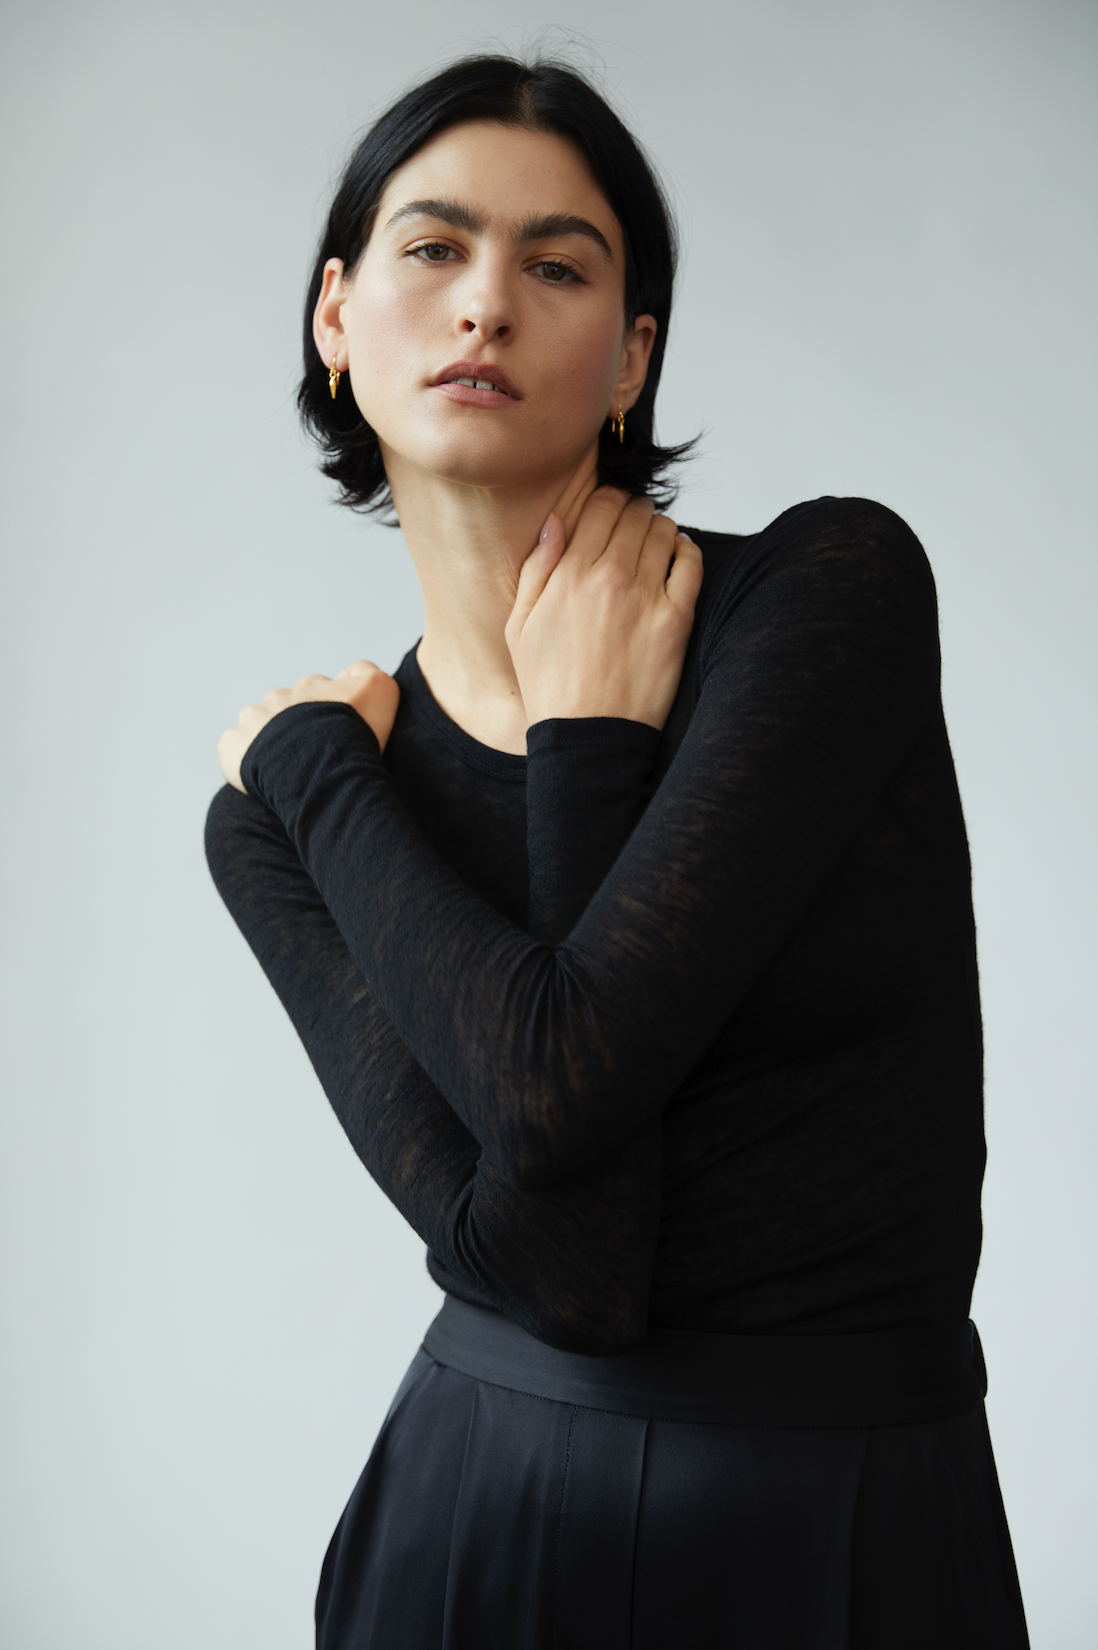 Model wears i seira pod drop earrings in collaboration with brand, frances de lourdes